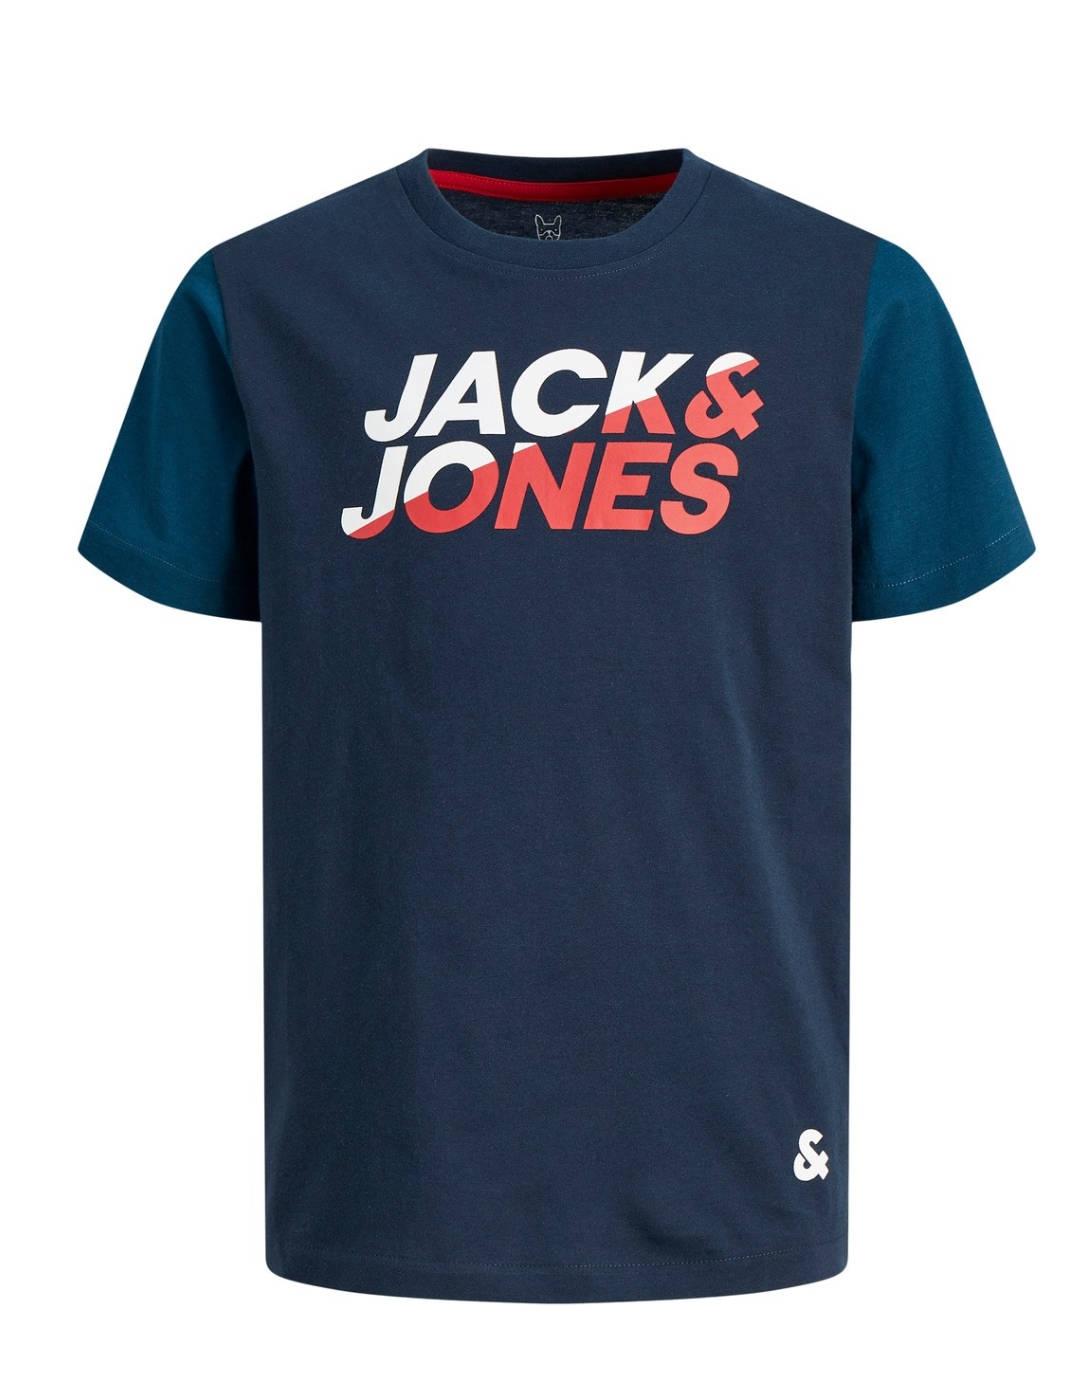 Camiseta Jack&Jones Junior azul marino manga corta de niño